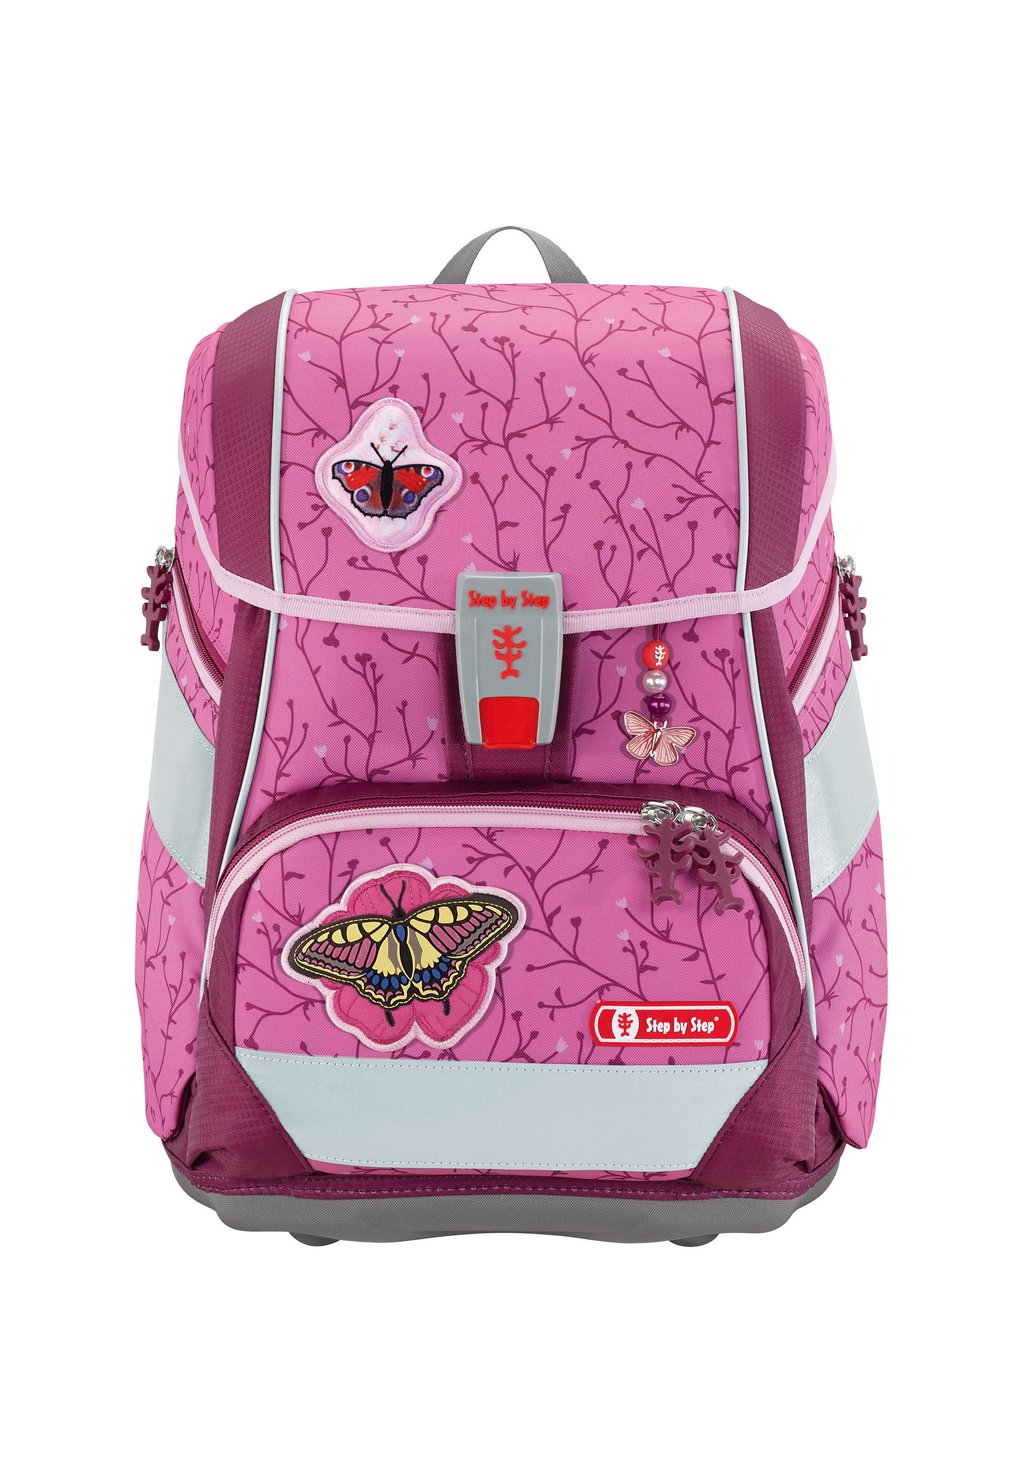 Набор школьных сумок 2IN1 PLUS SET 6TLG Step by Step, цвет natural butterfly ранец детский с ортопедической спинкой step by step kid shiny butterfly [183699]